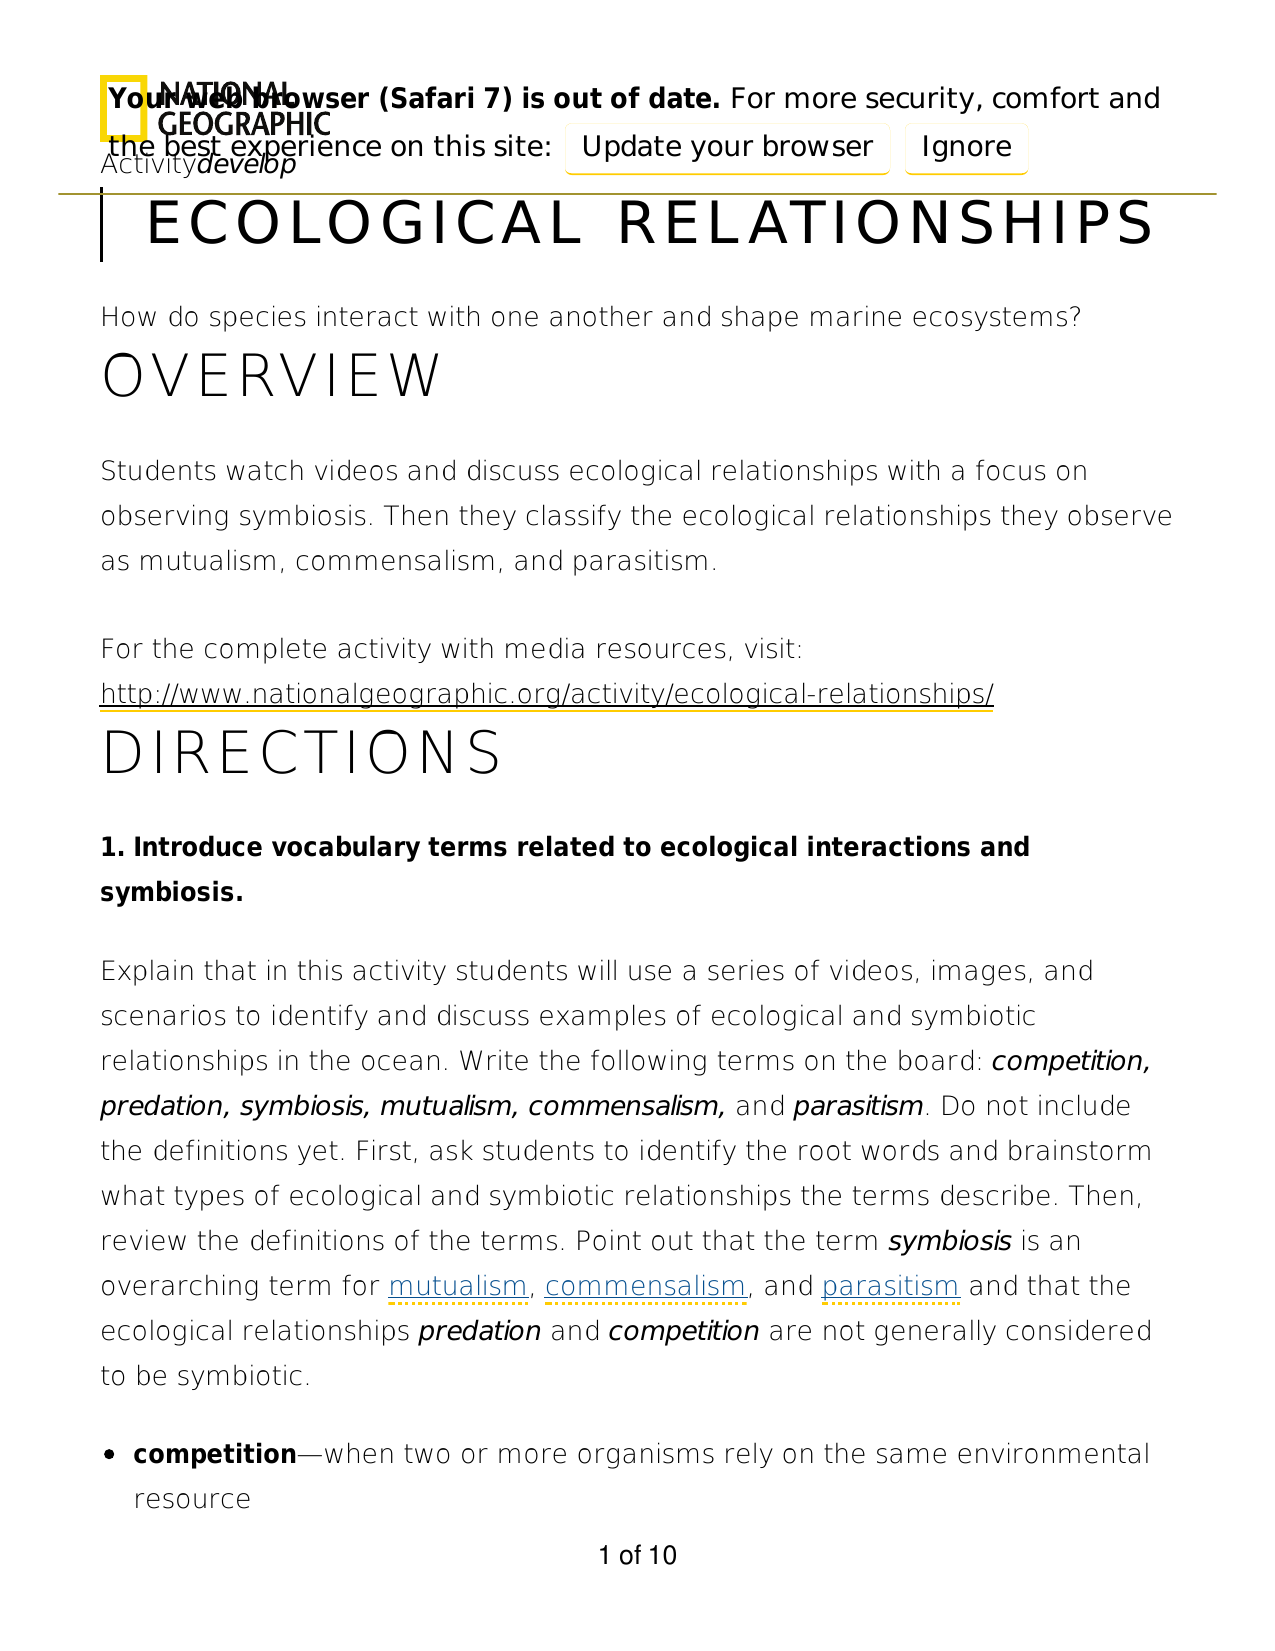 ecological-relationships-11 Regarding Ecological Relationships Worksheet Answers